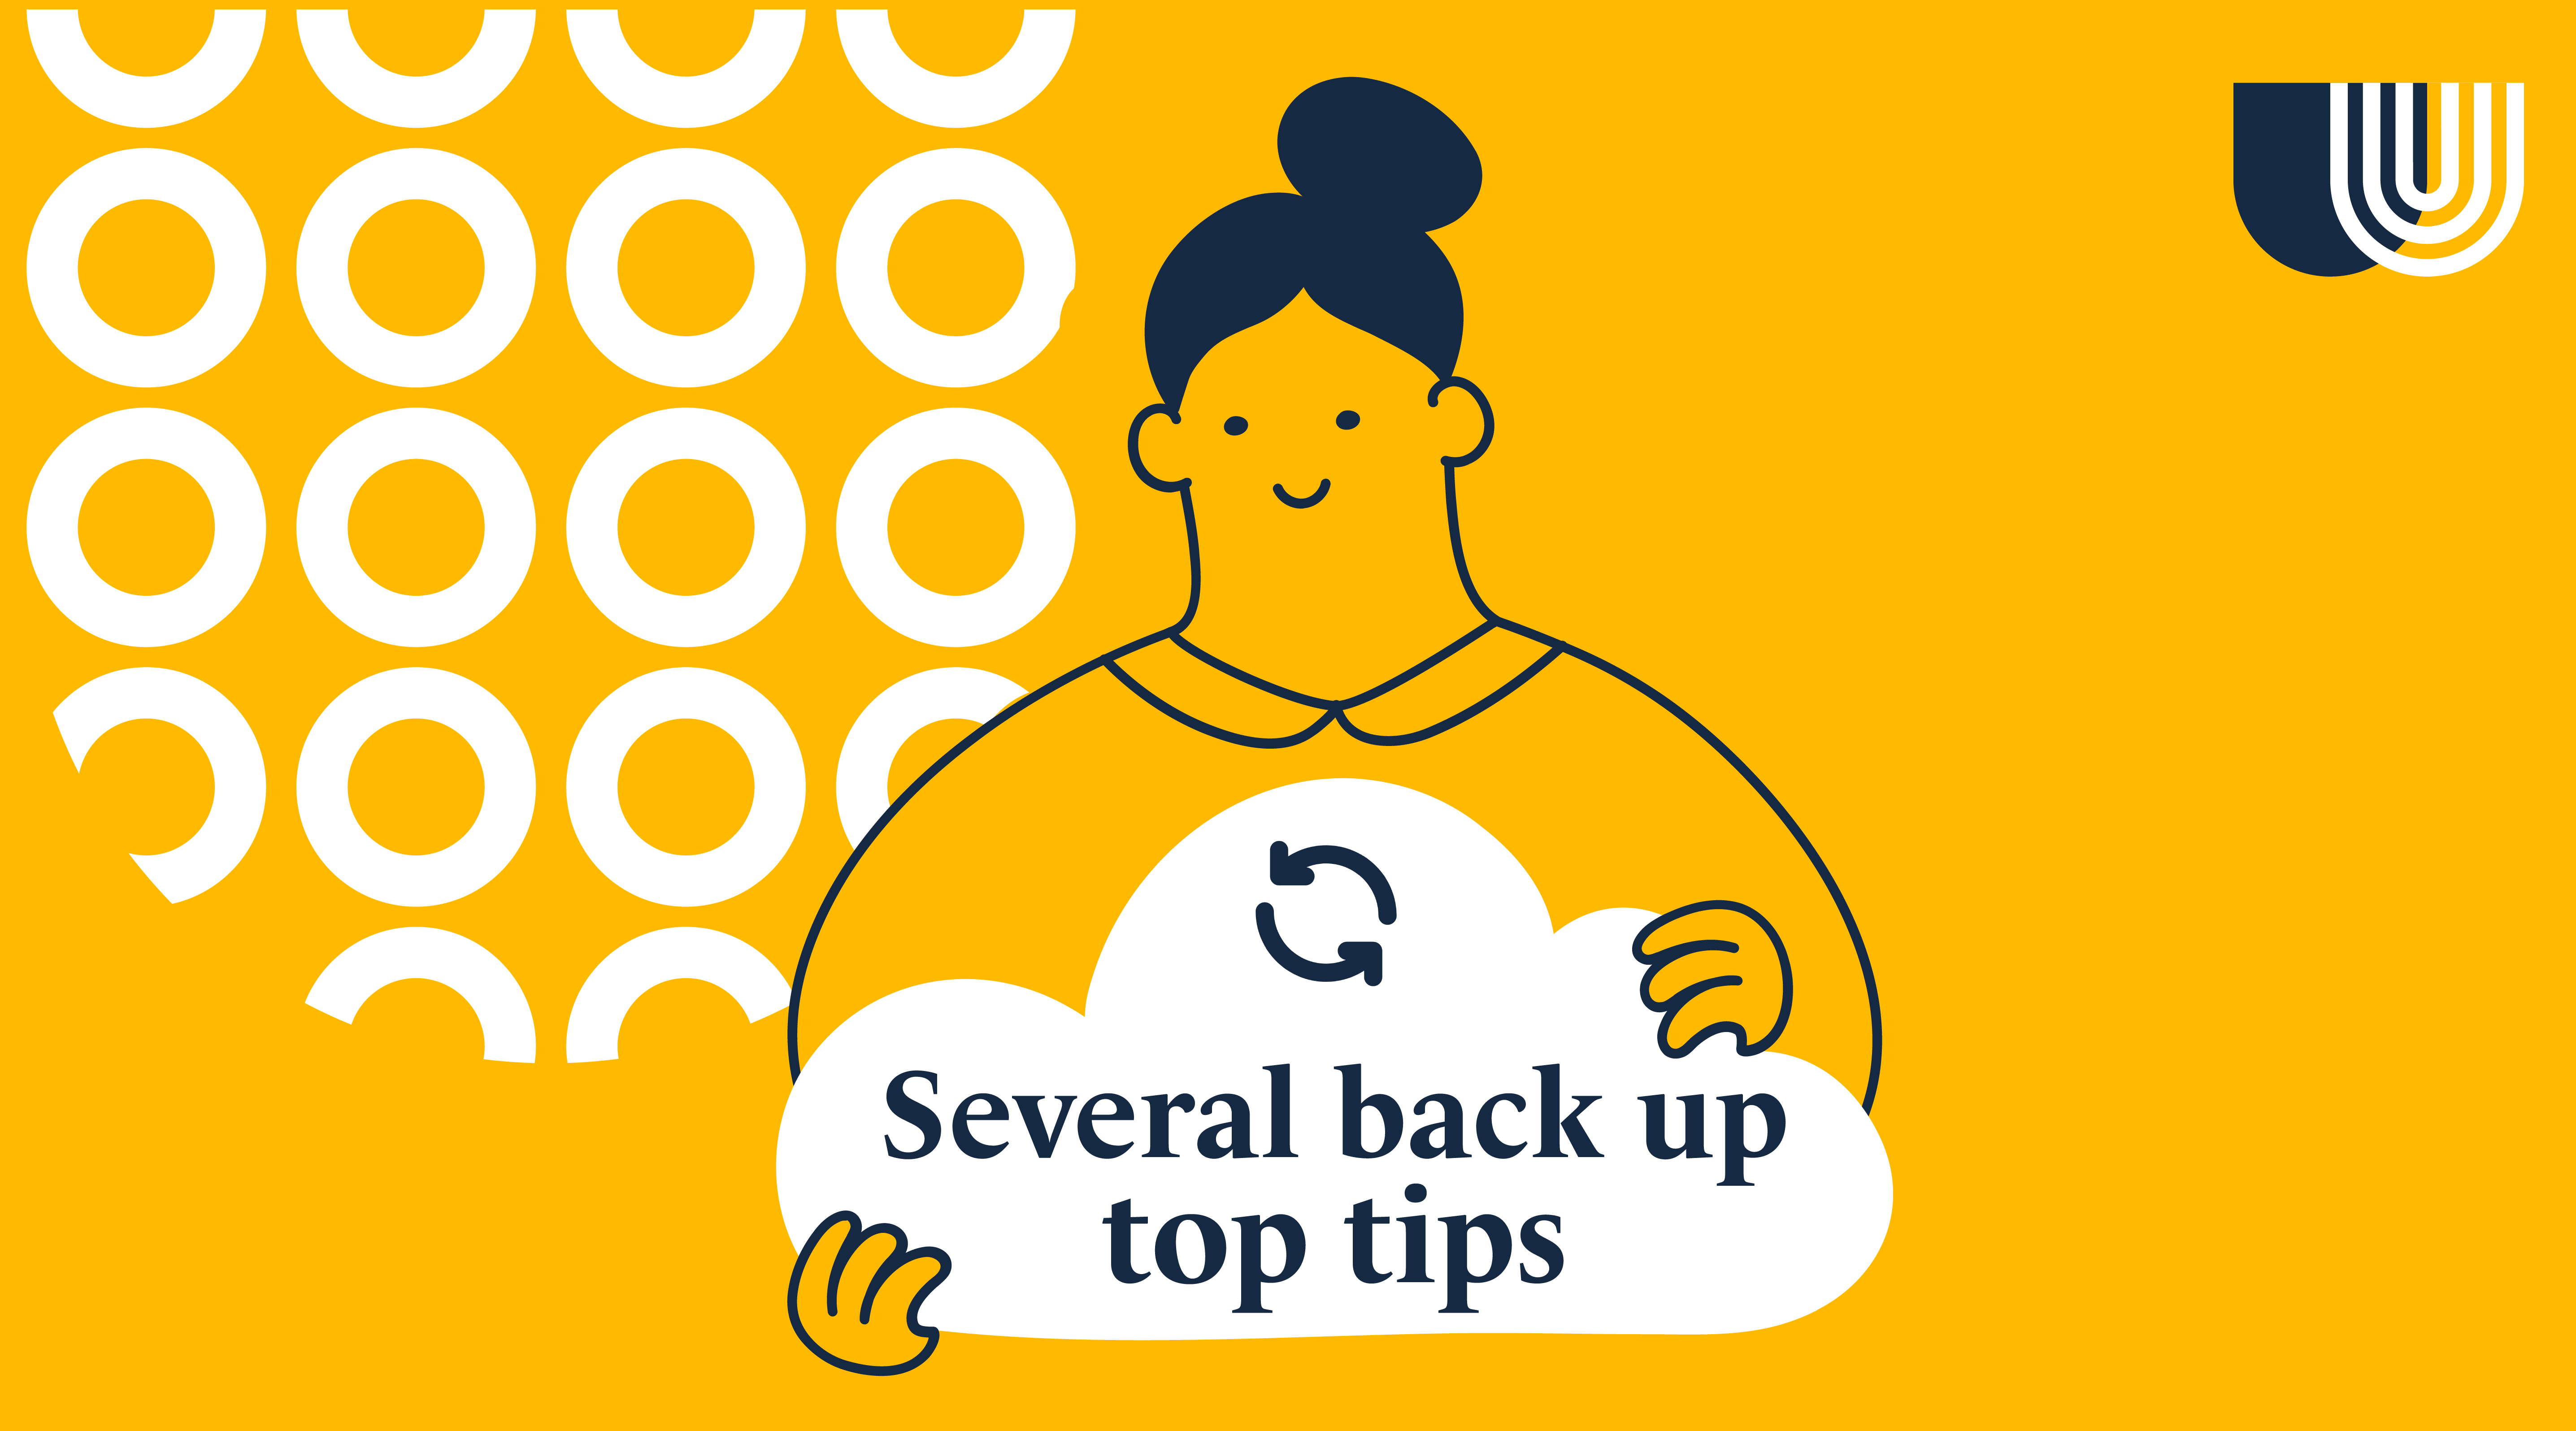 Several back up top tips